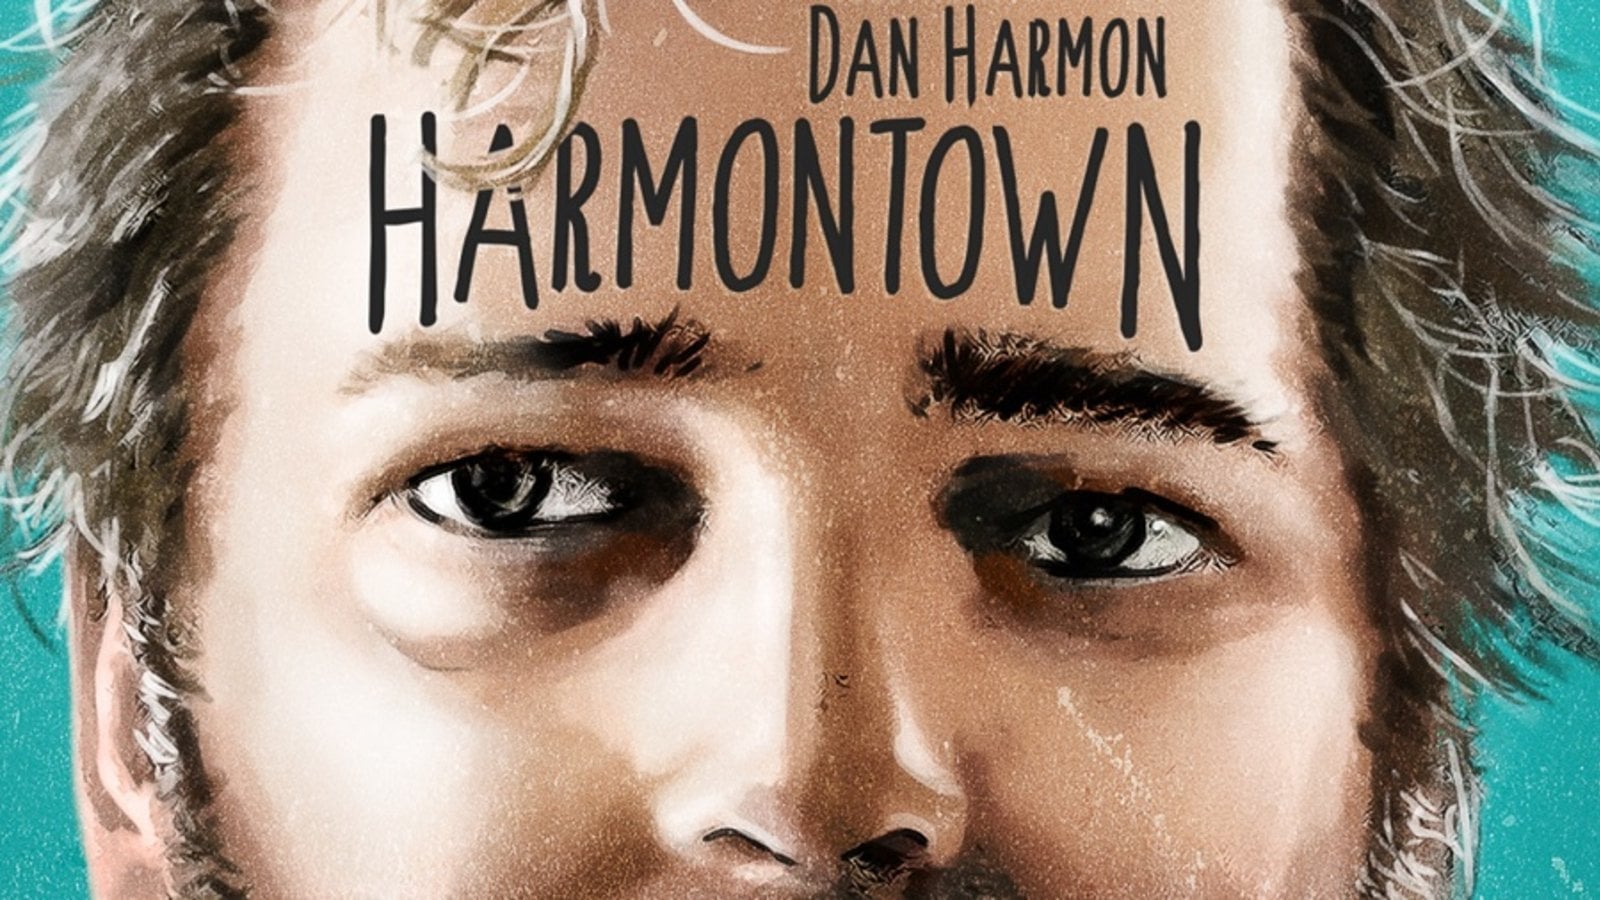 Harmontown (2014)